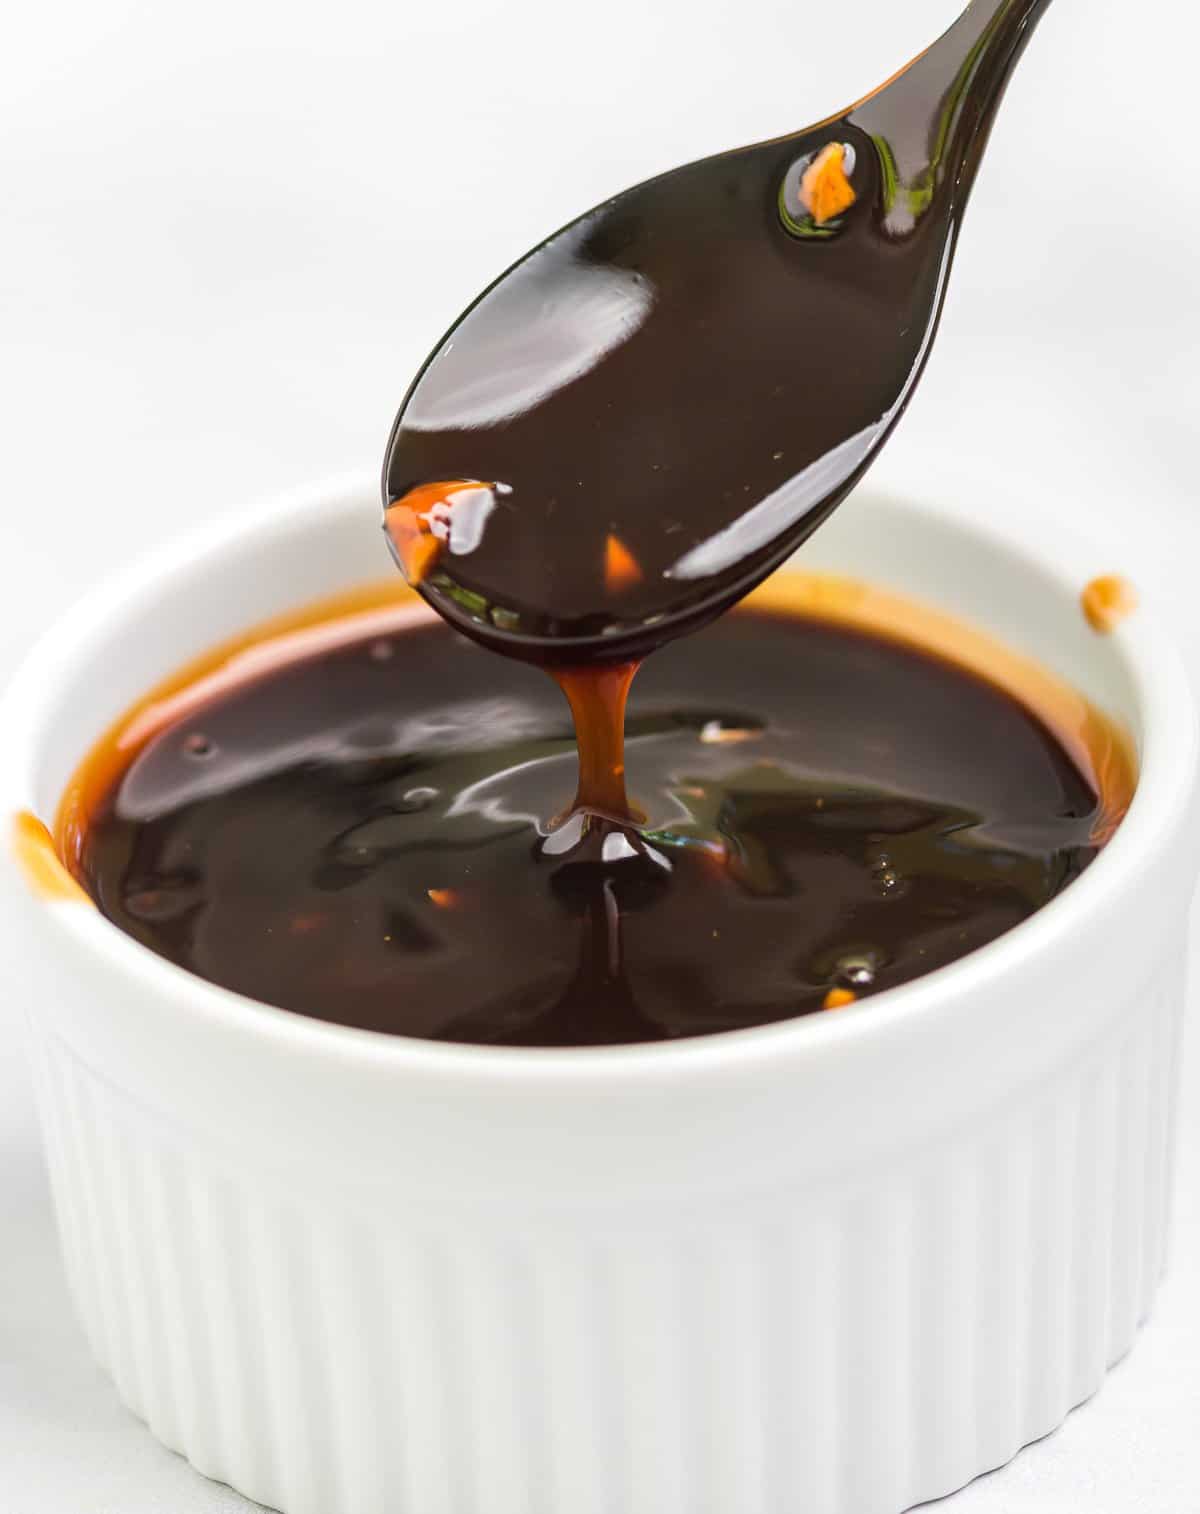 spoon dripping teriyaki sauce over a ramekin